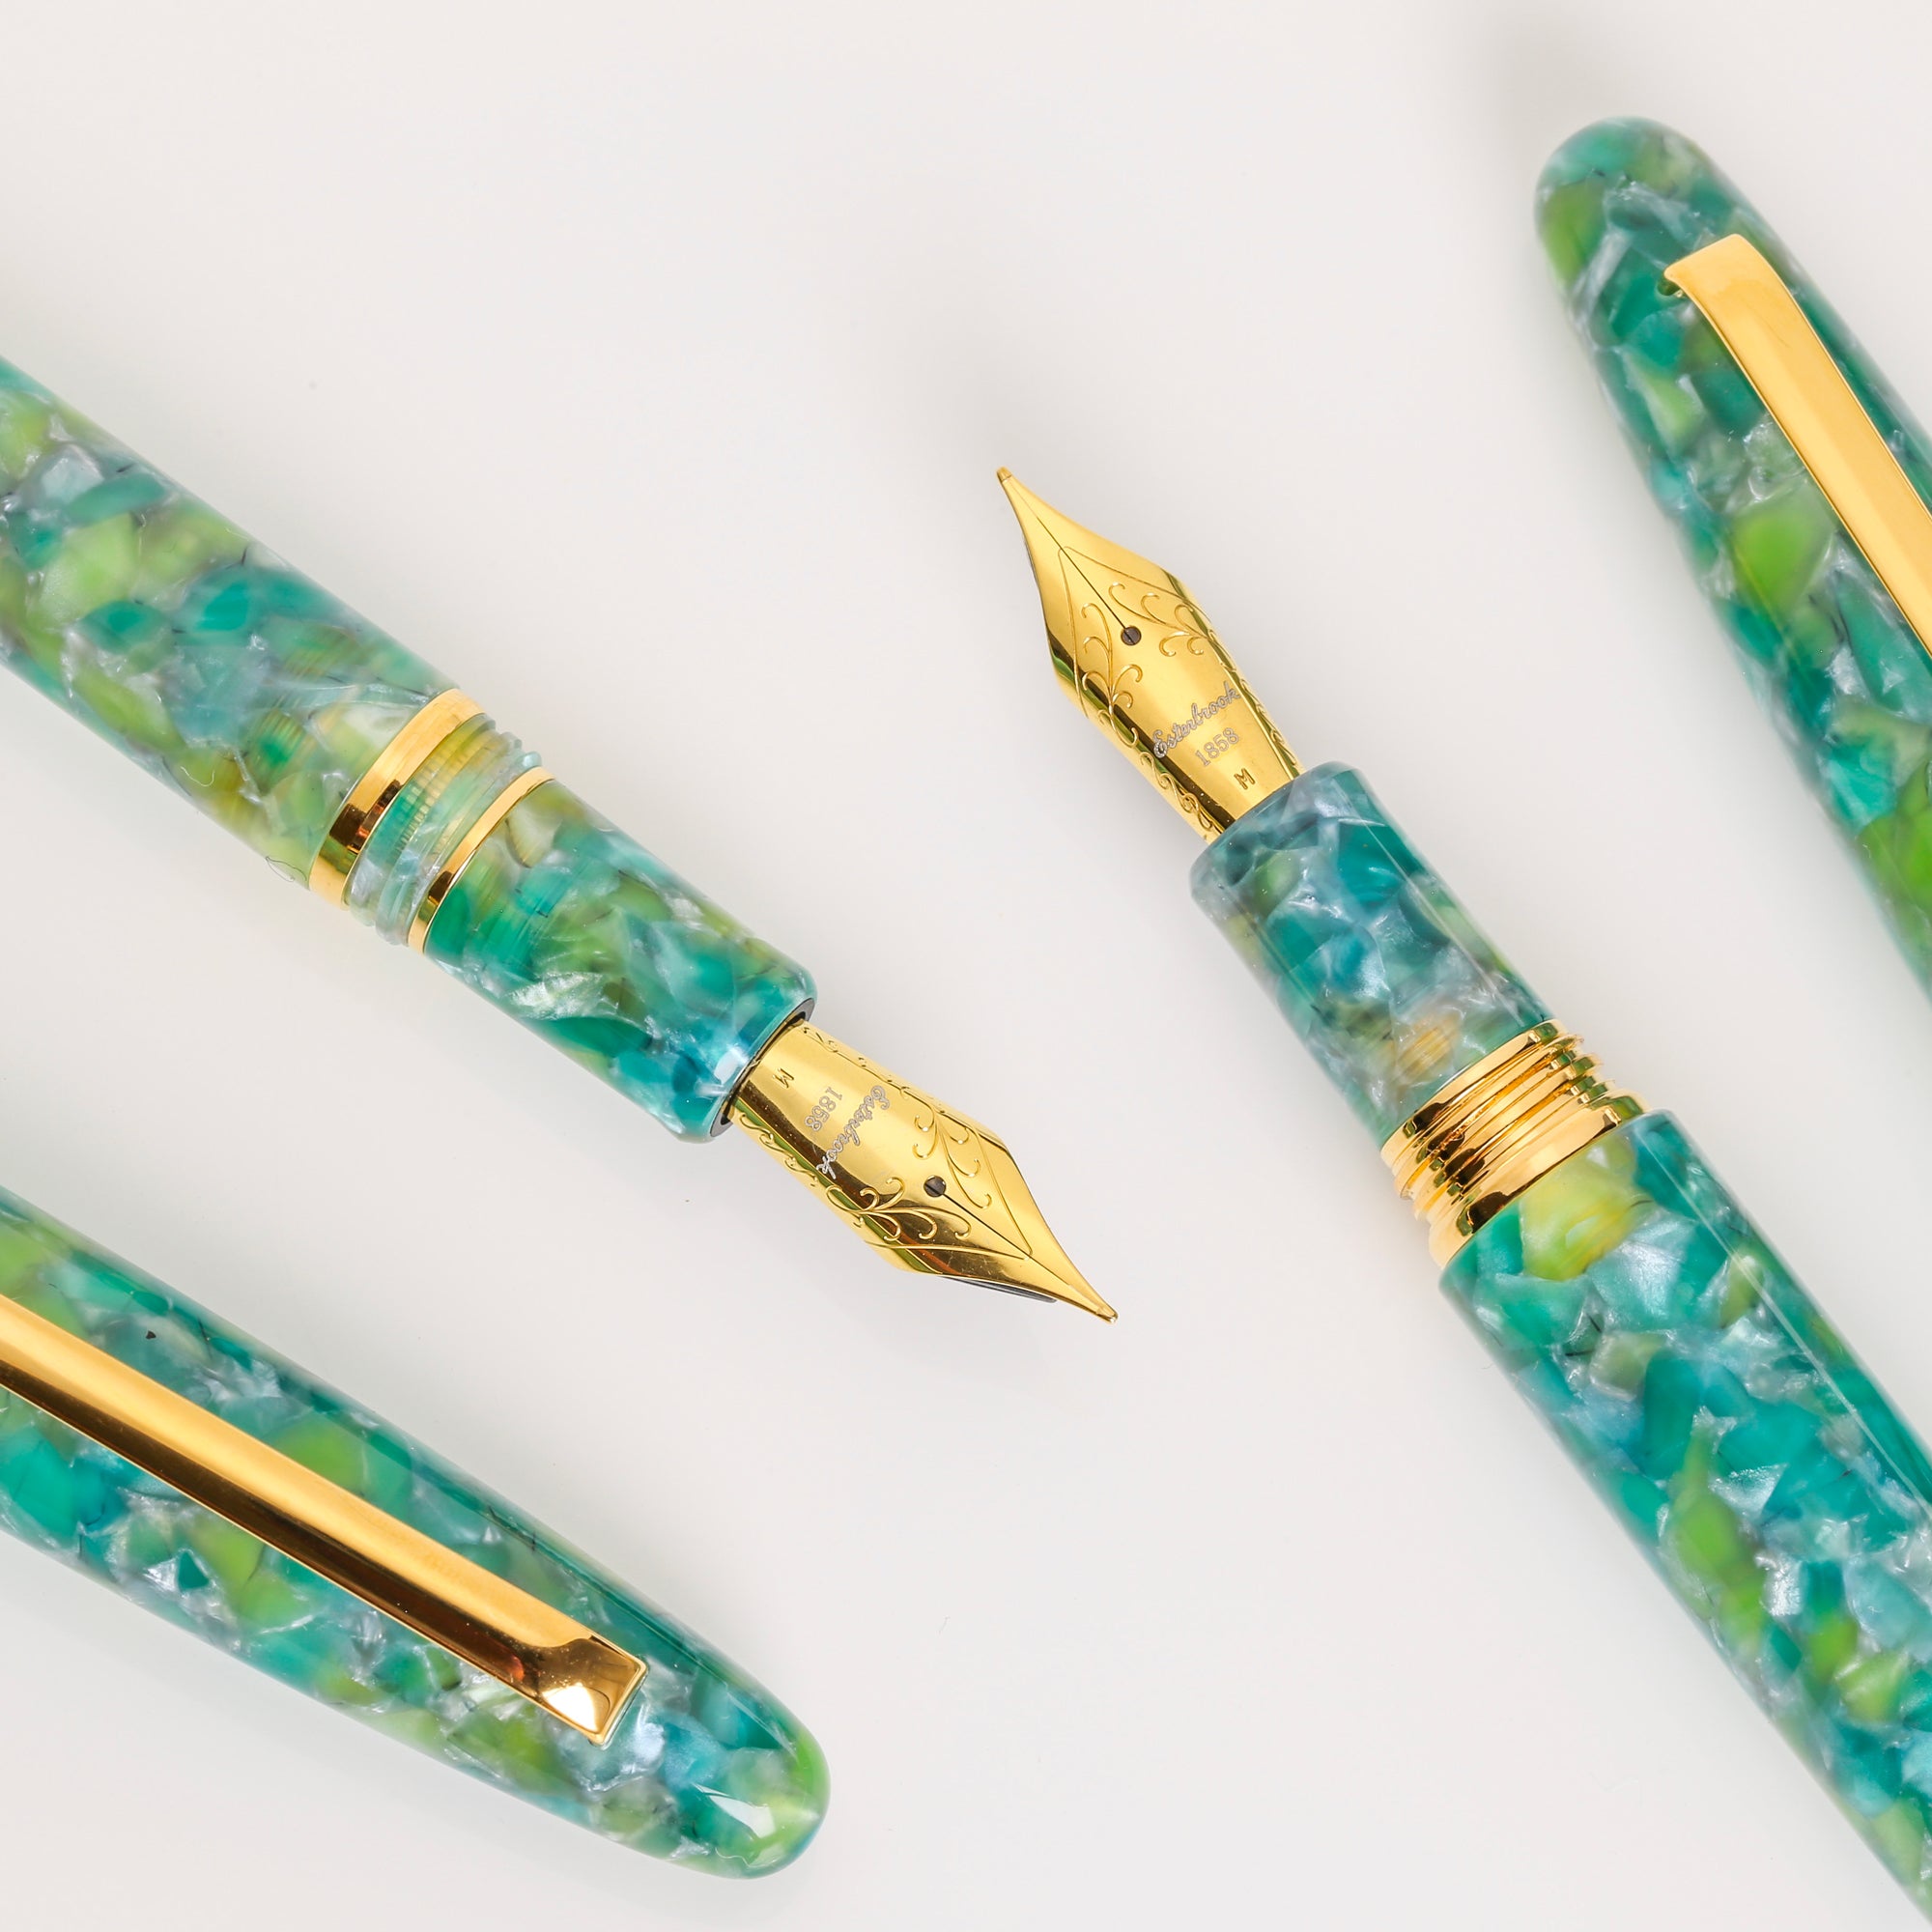 Sea Glass Collection Oversize FP Gold Trim - Custom Scribe Nib